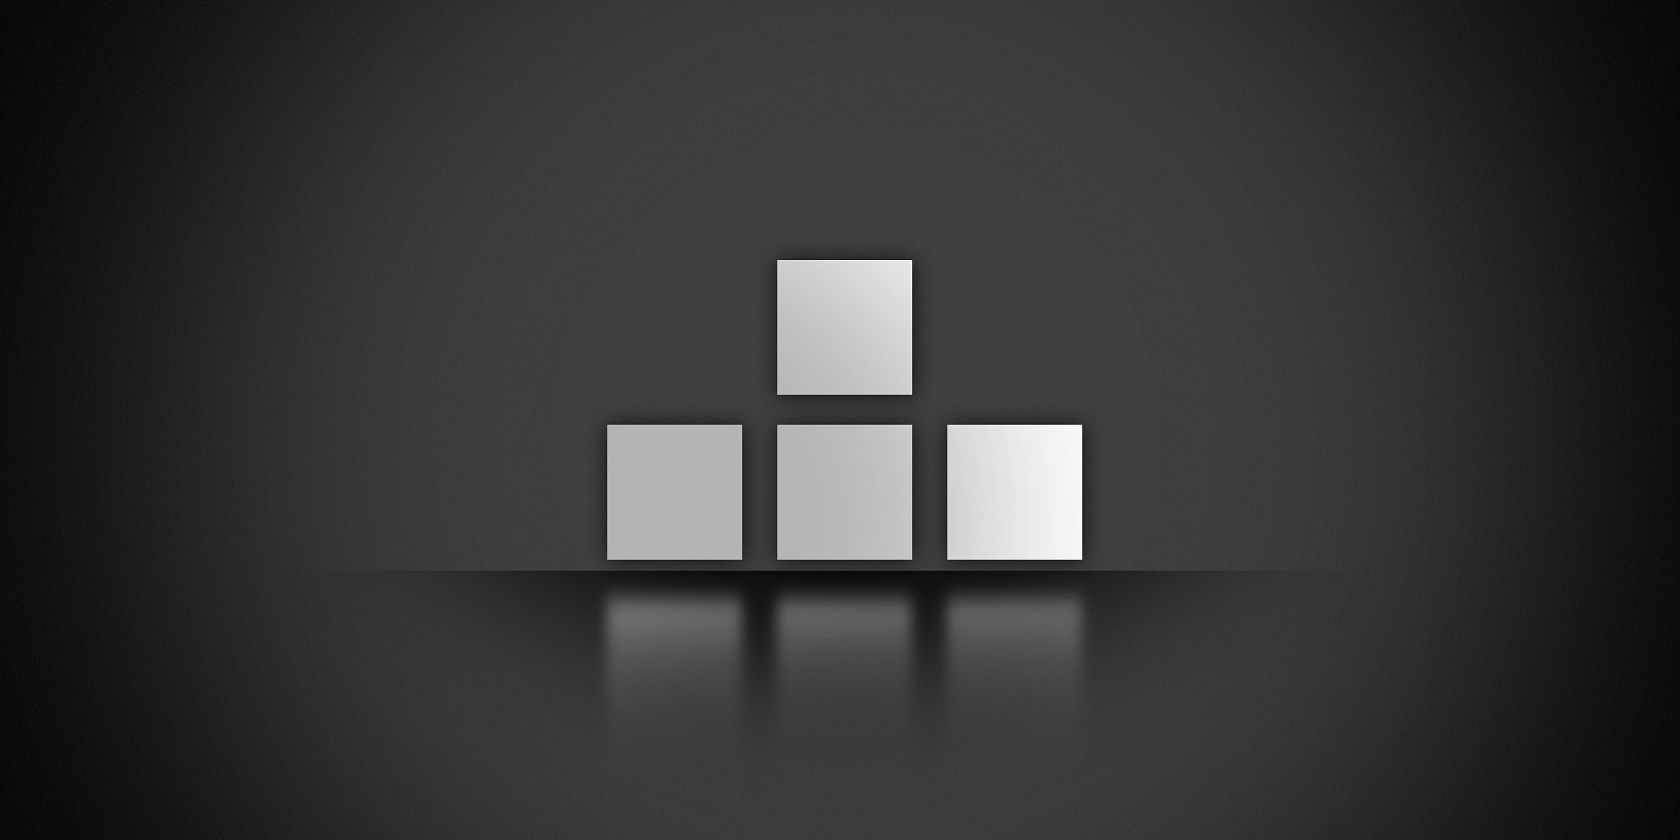 T Piece tetrimino tetris block on grey background